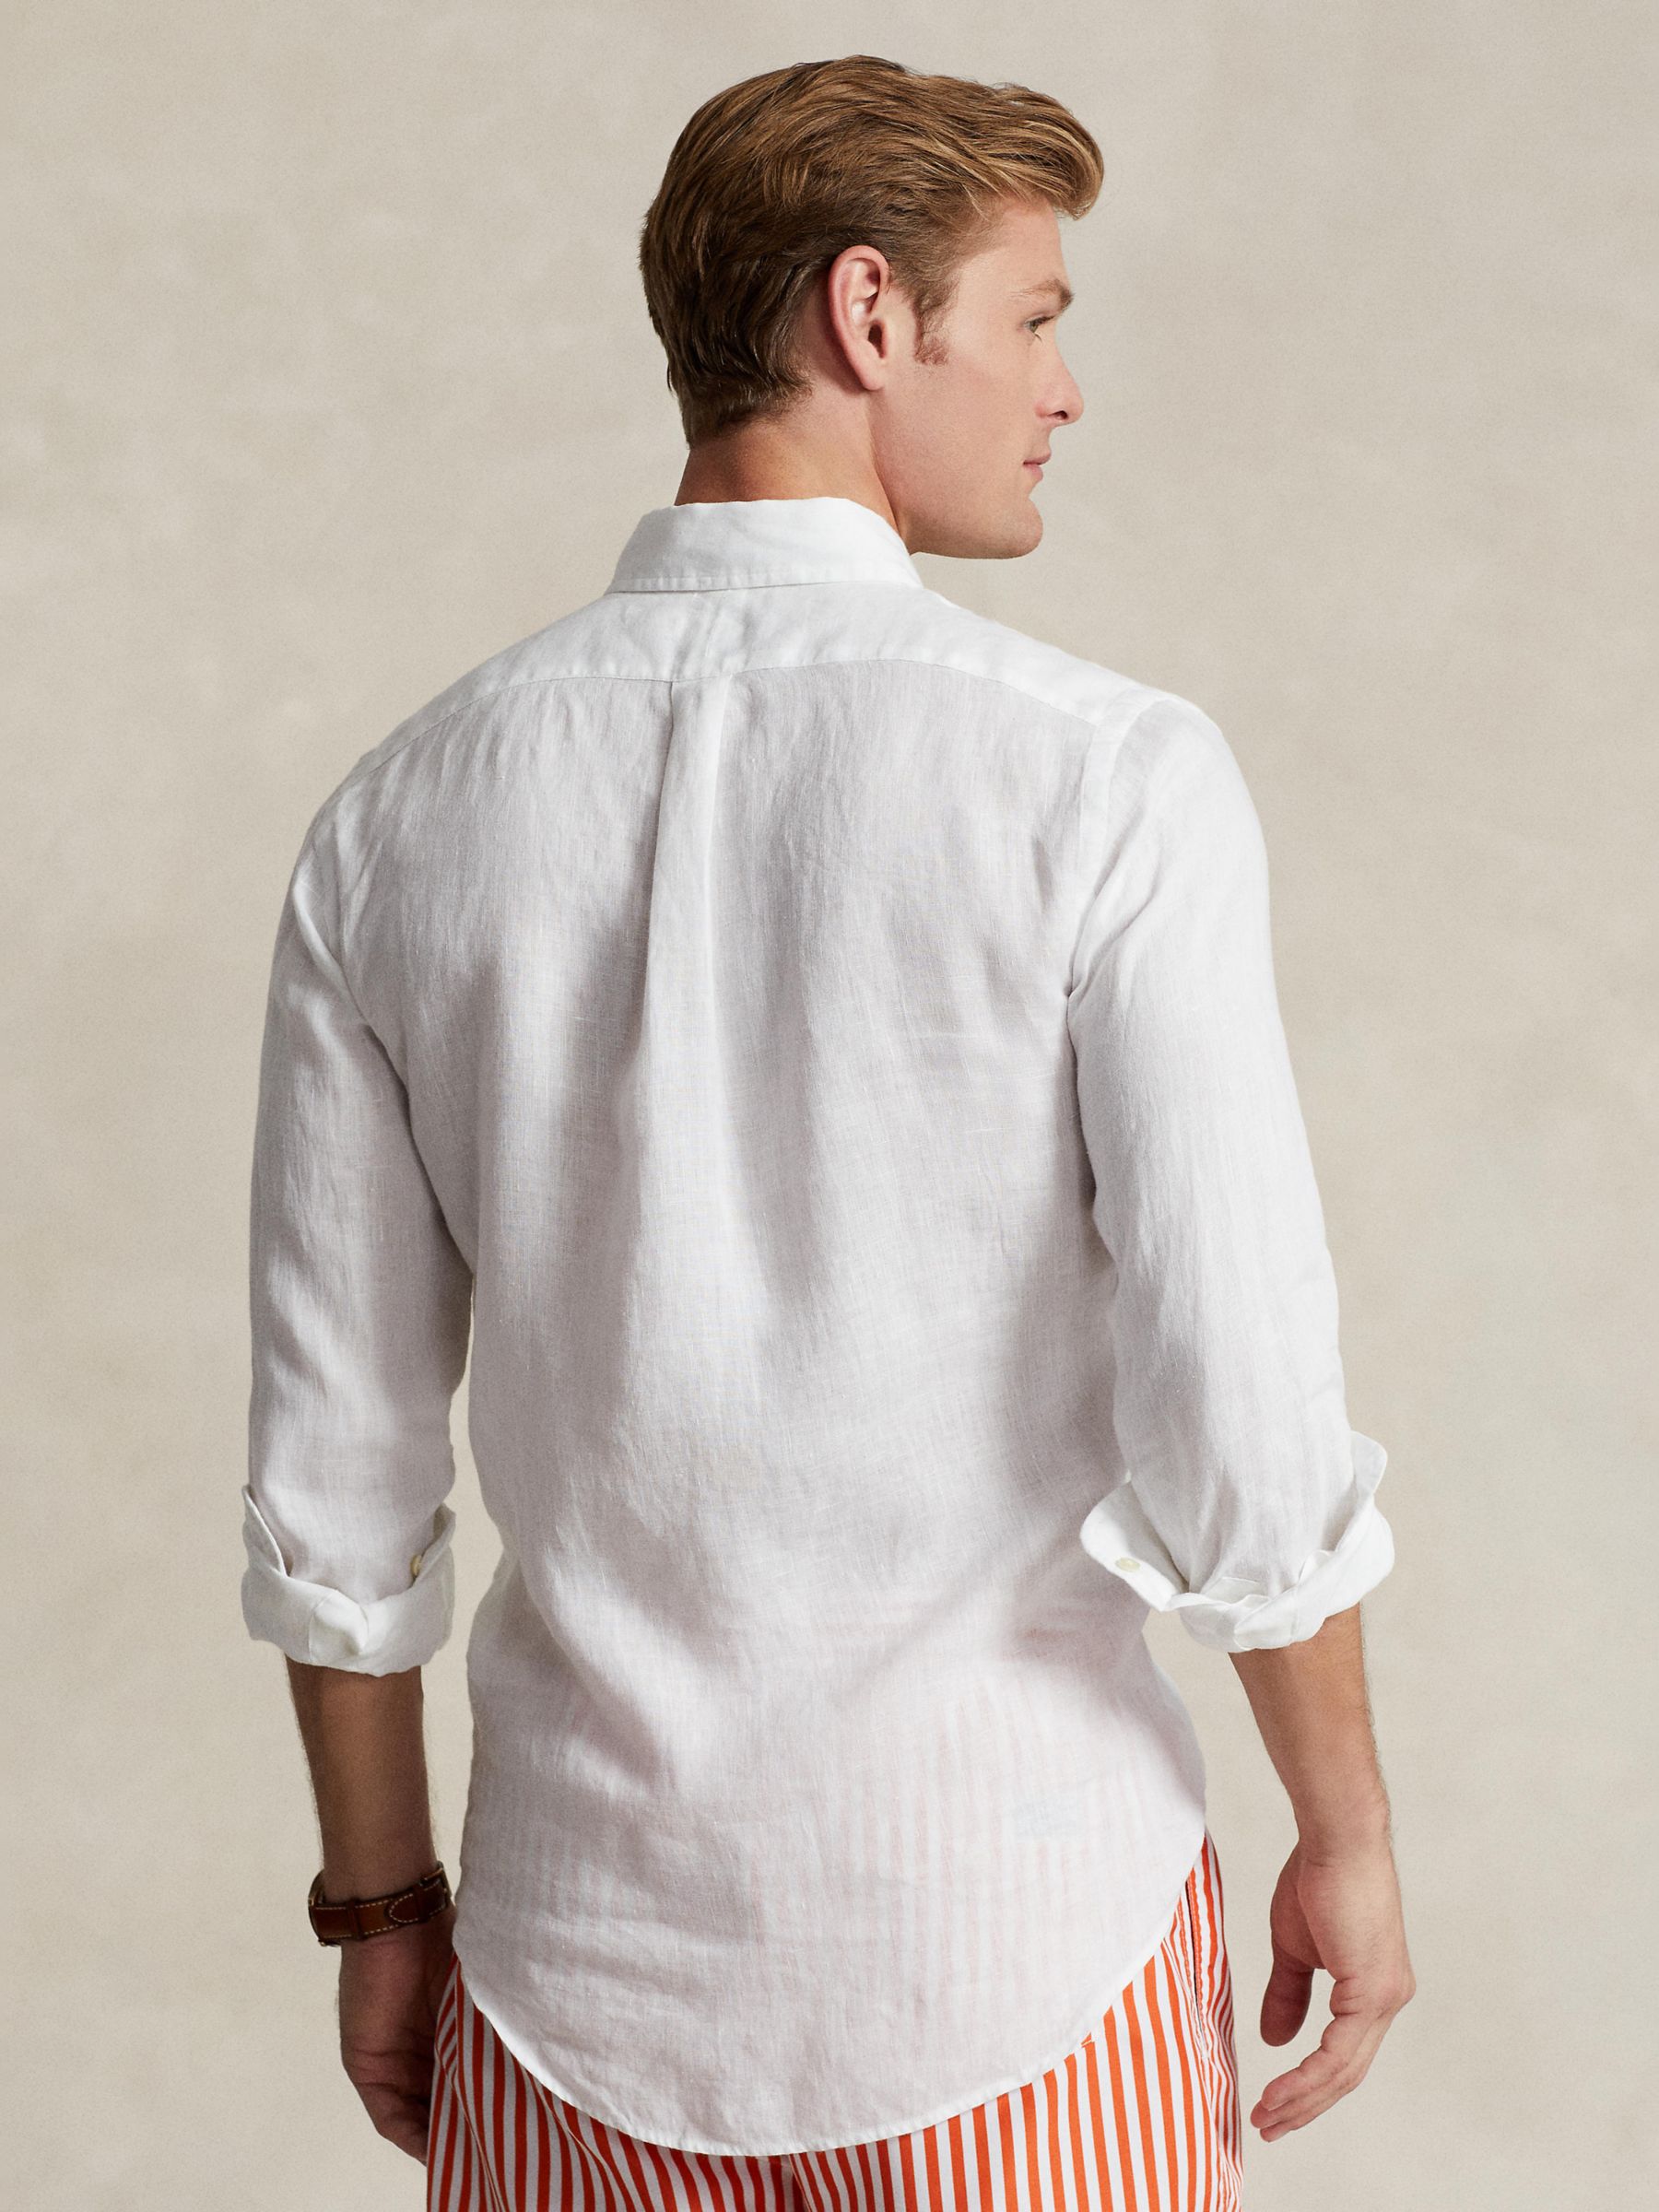 Ralph Lauren Custom Fit Linen Shirt, White, S